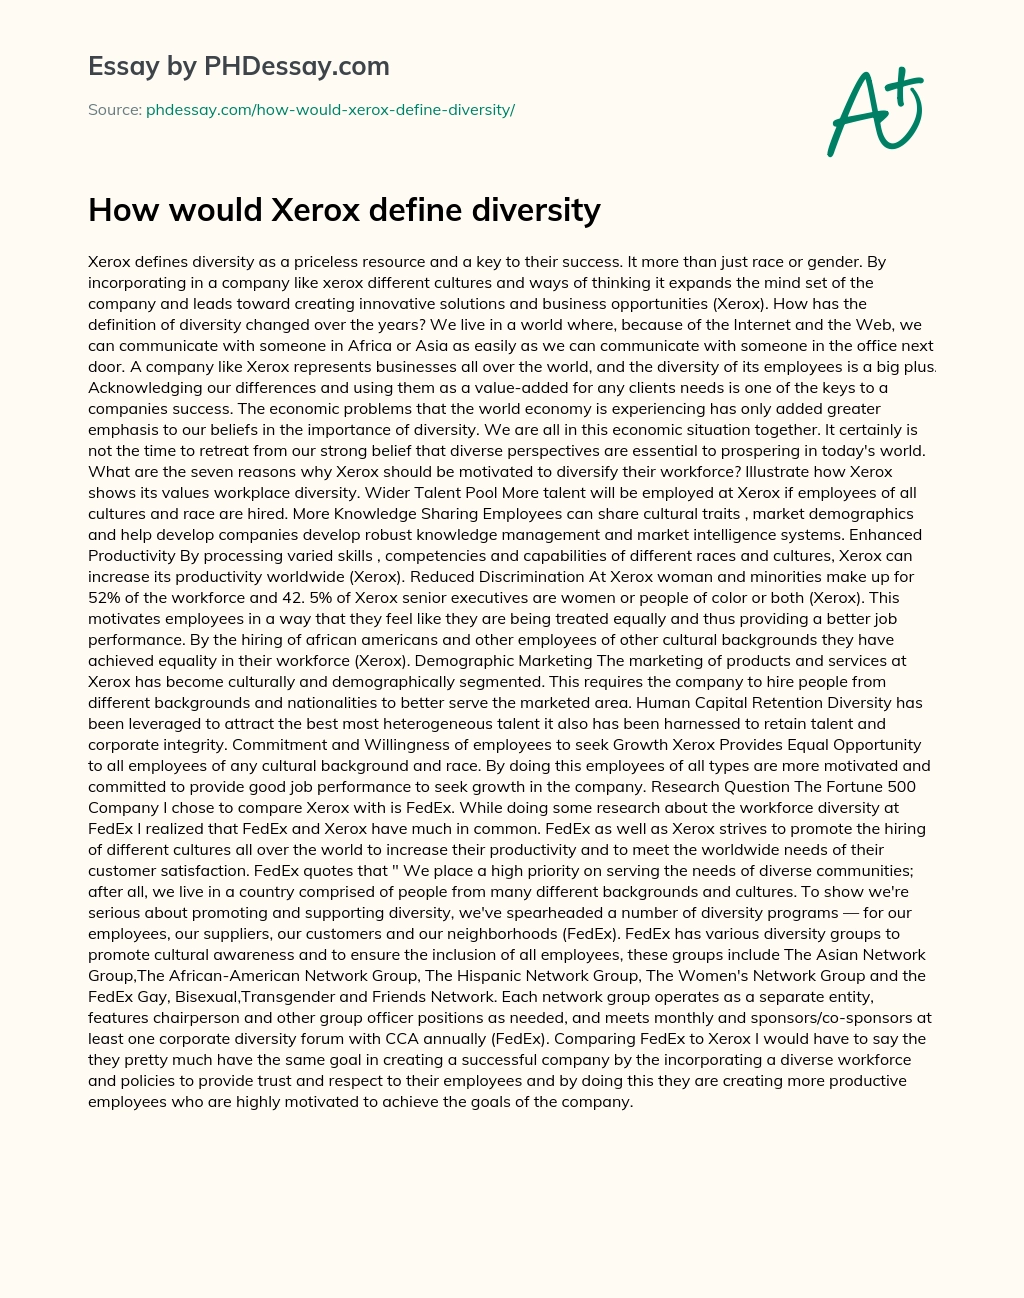 How would Xerox define diversity essay